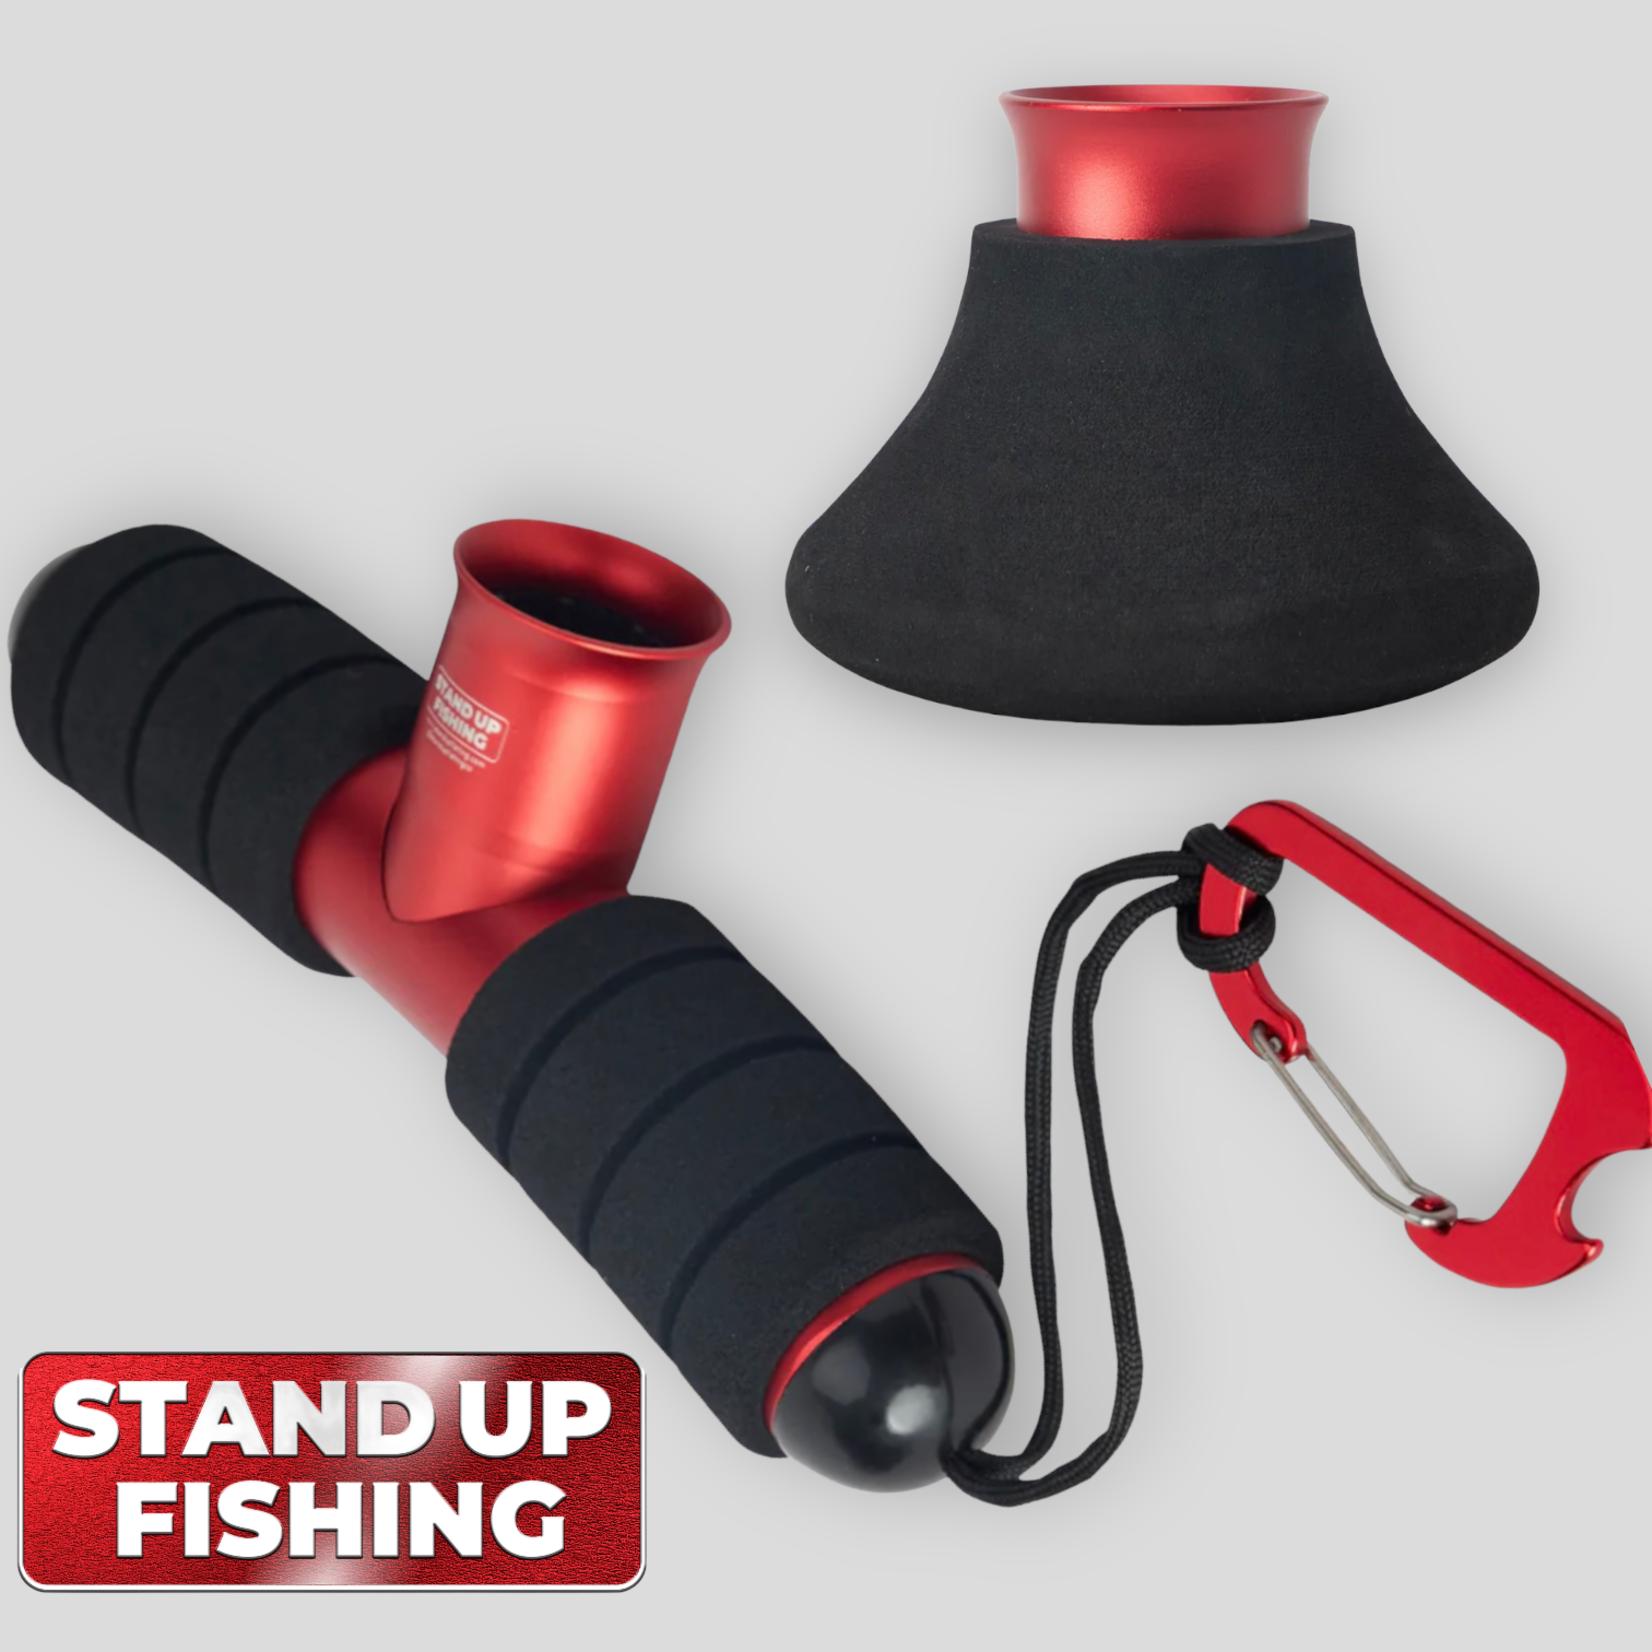 https://cdn.shoplightspeed.com/shops/665849/files/51902101/1652x1652x2/stand-up-fishing-stand-up-fishing.jpg